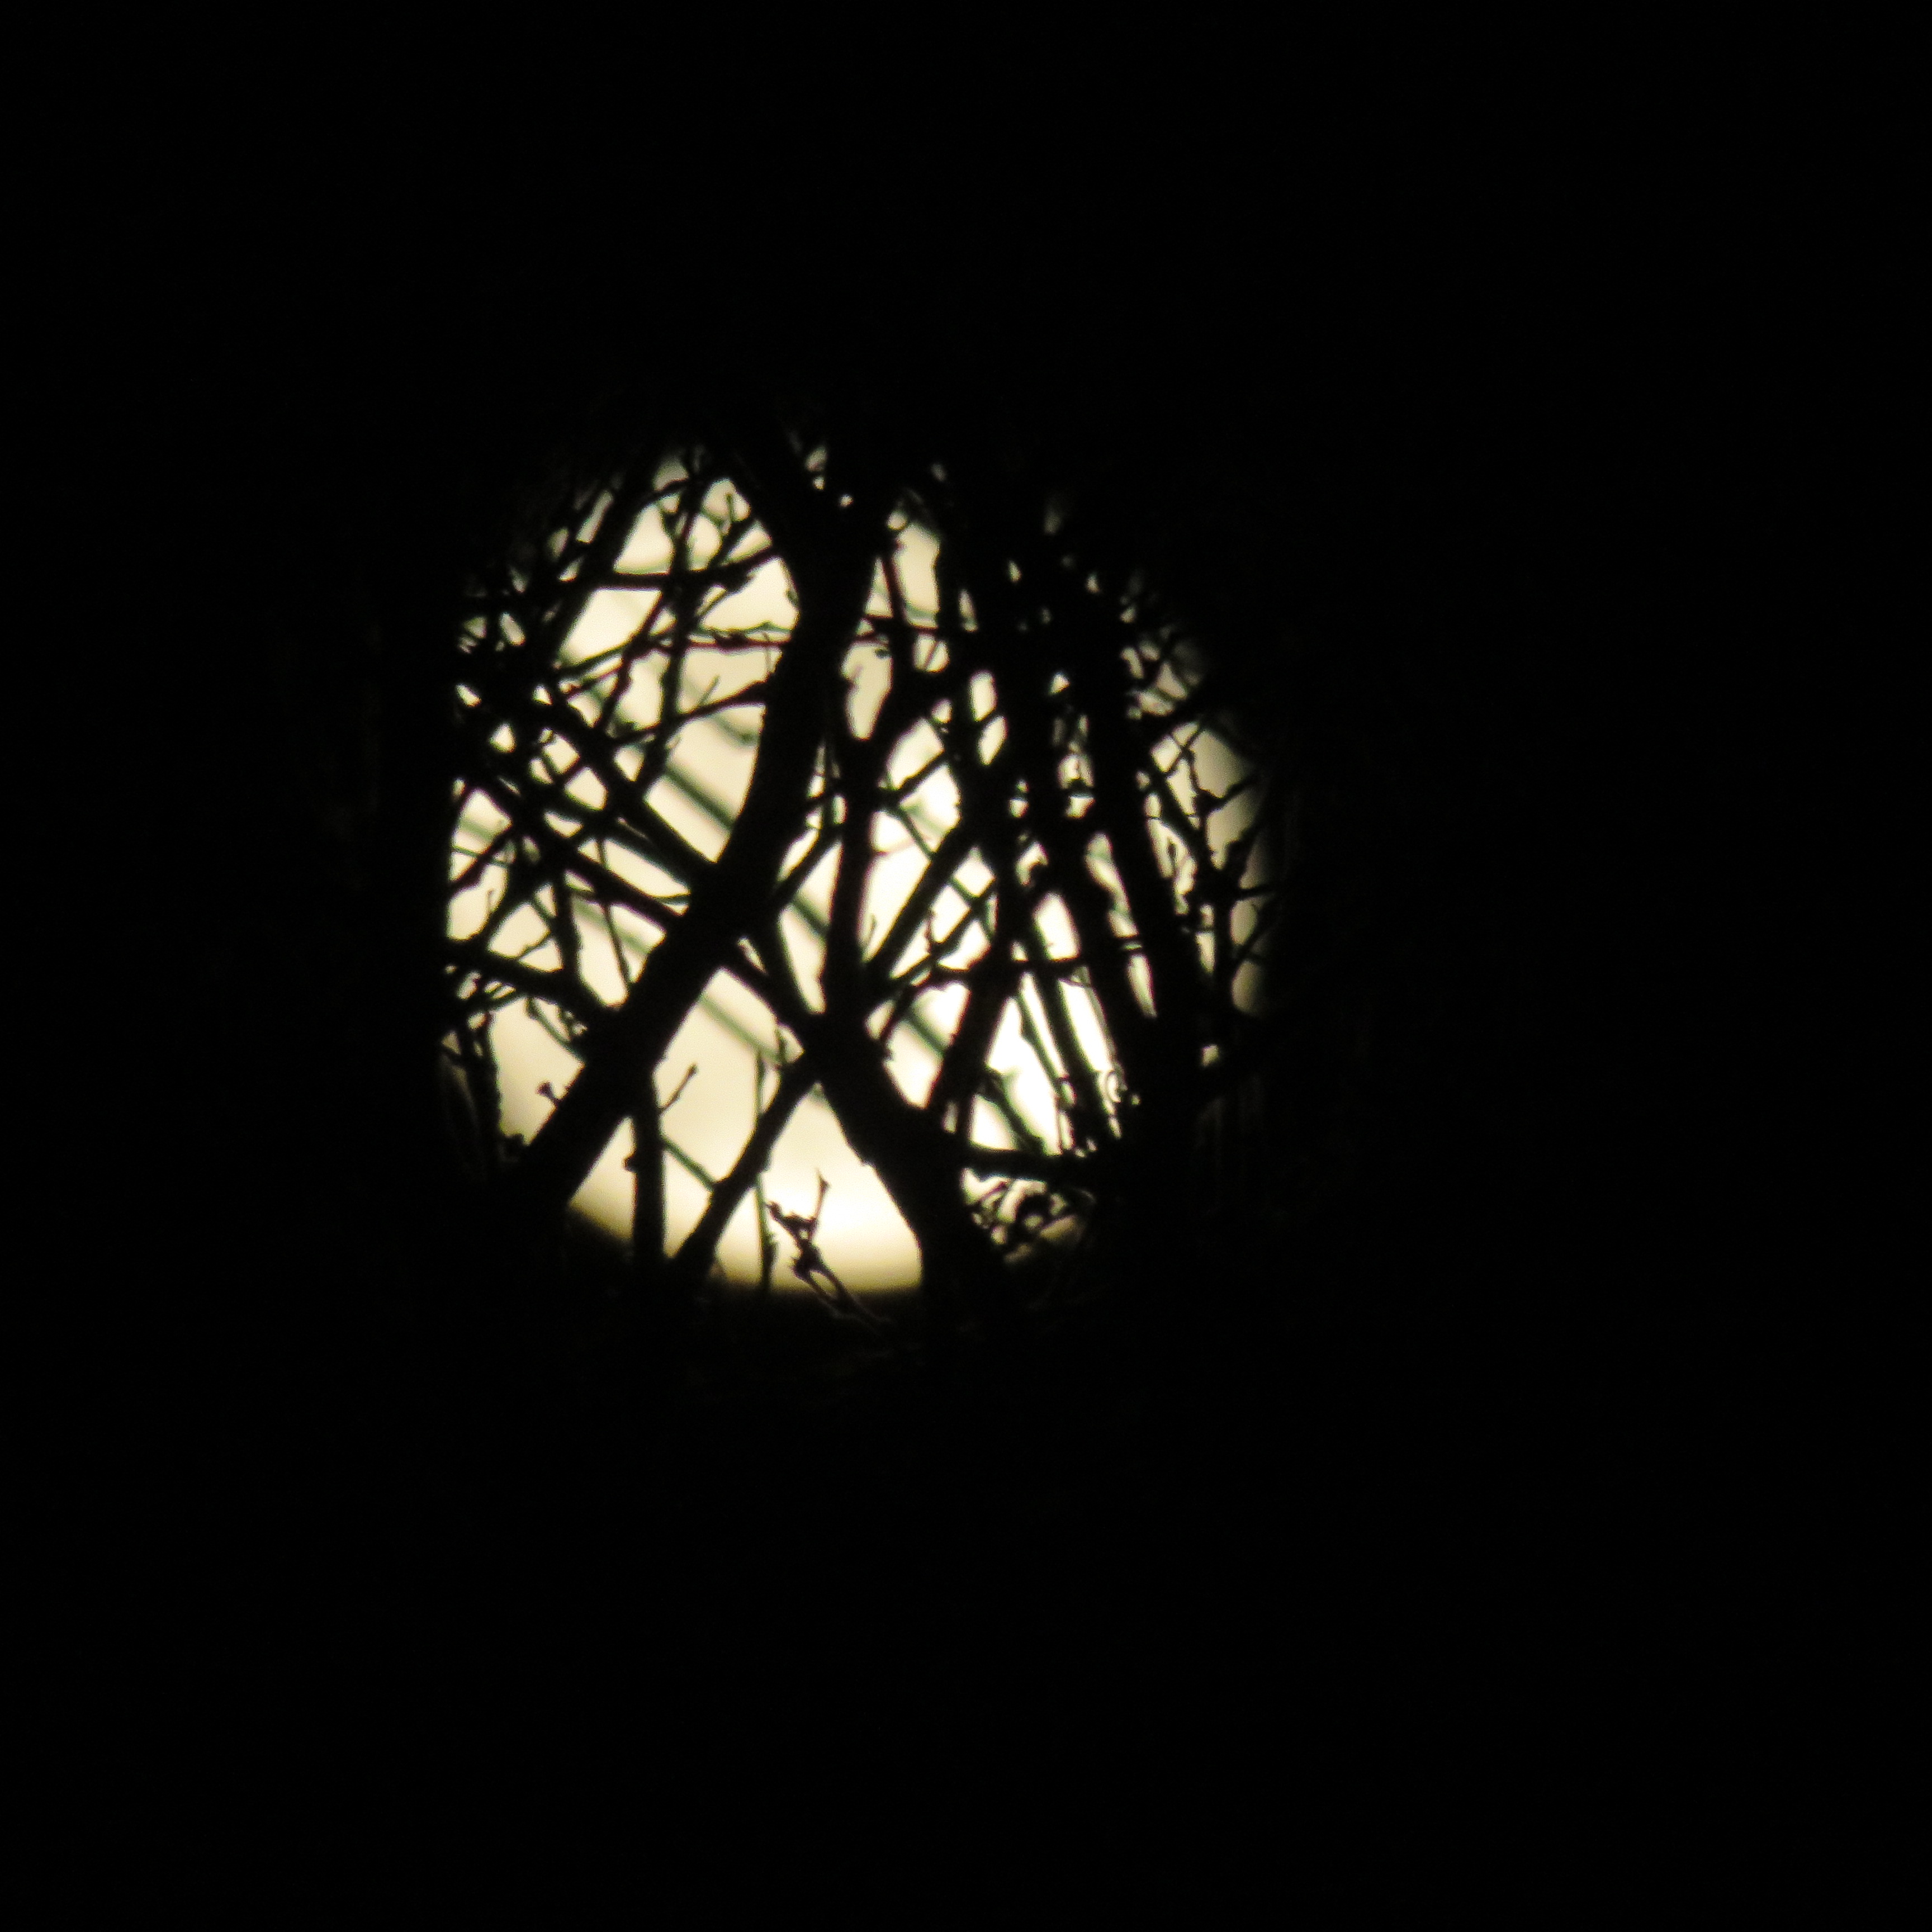 Photo I took of the Moon through the tree